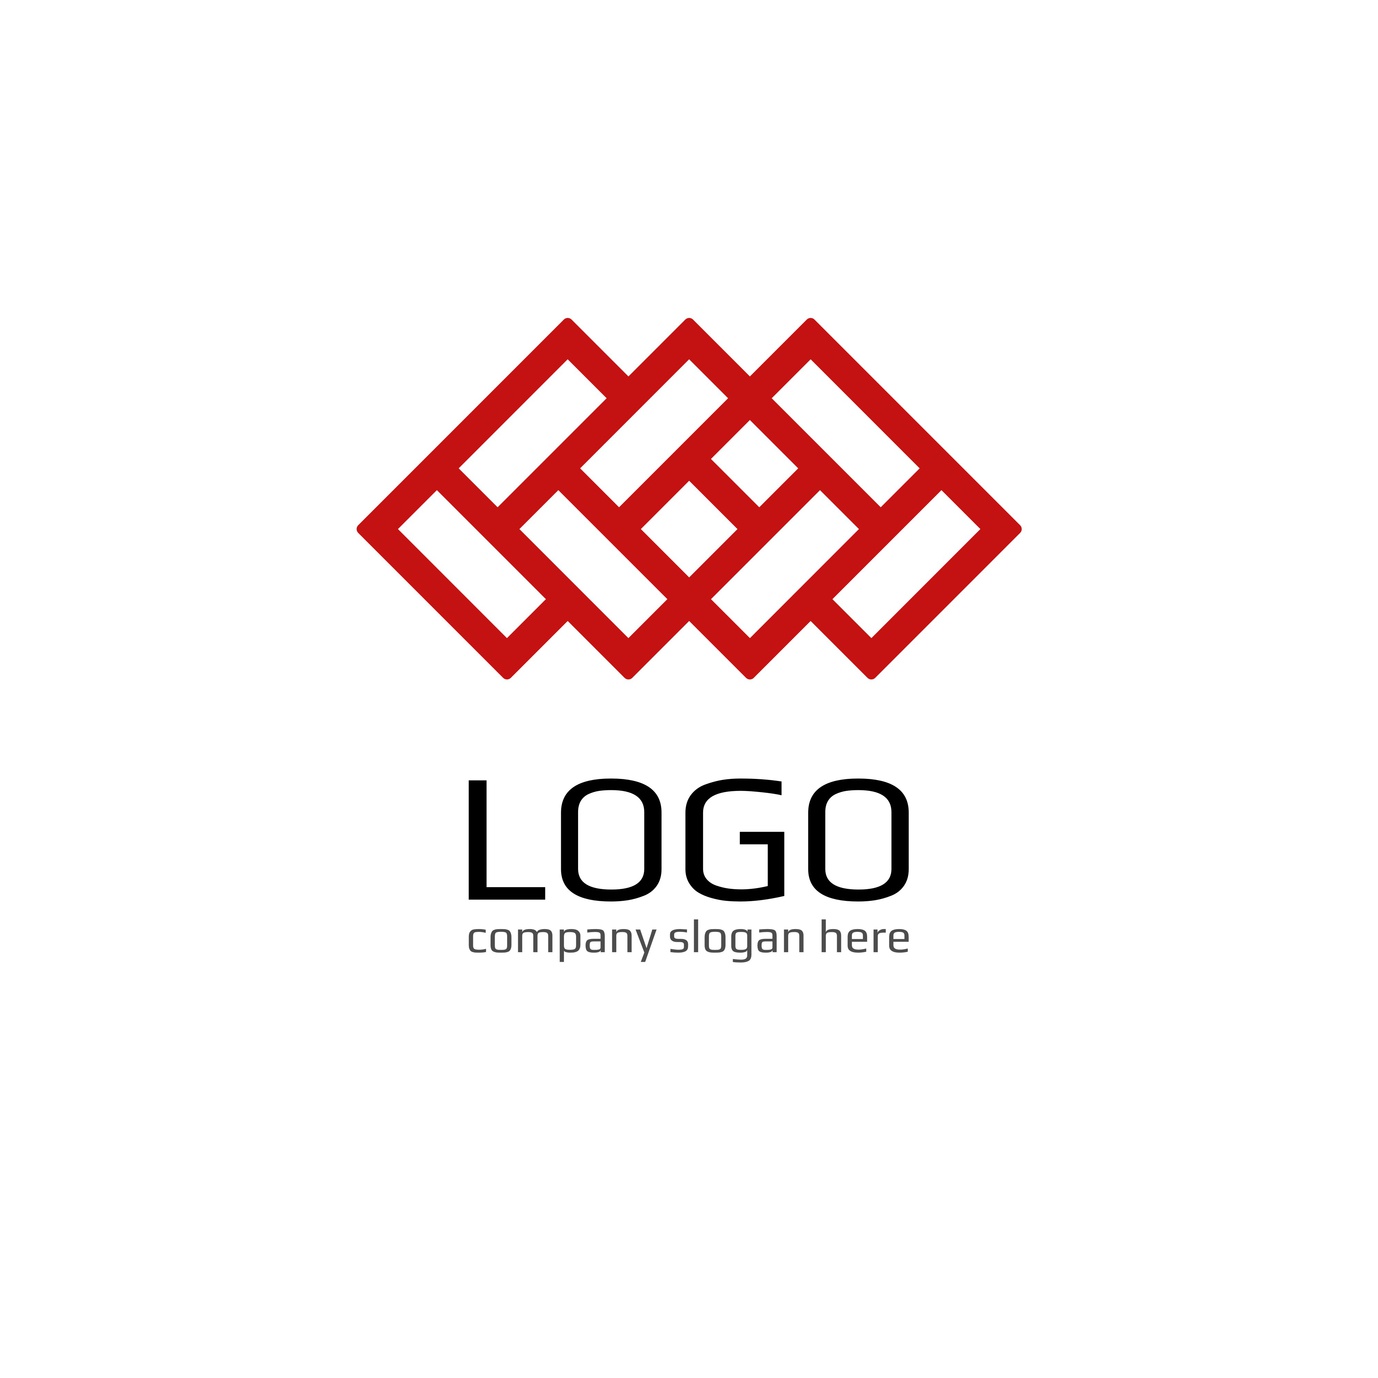 door company logo